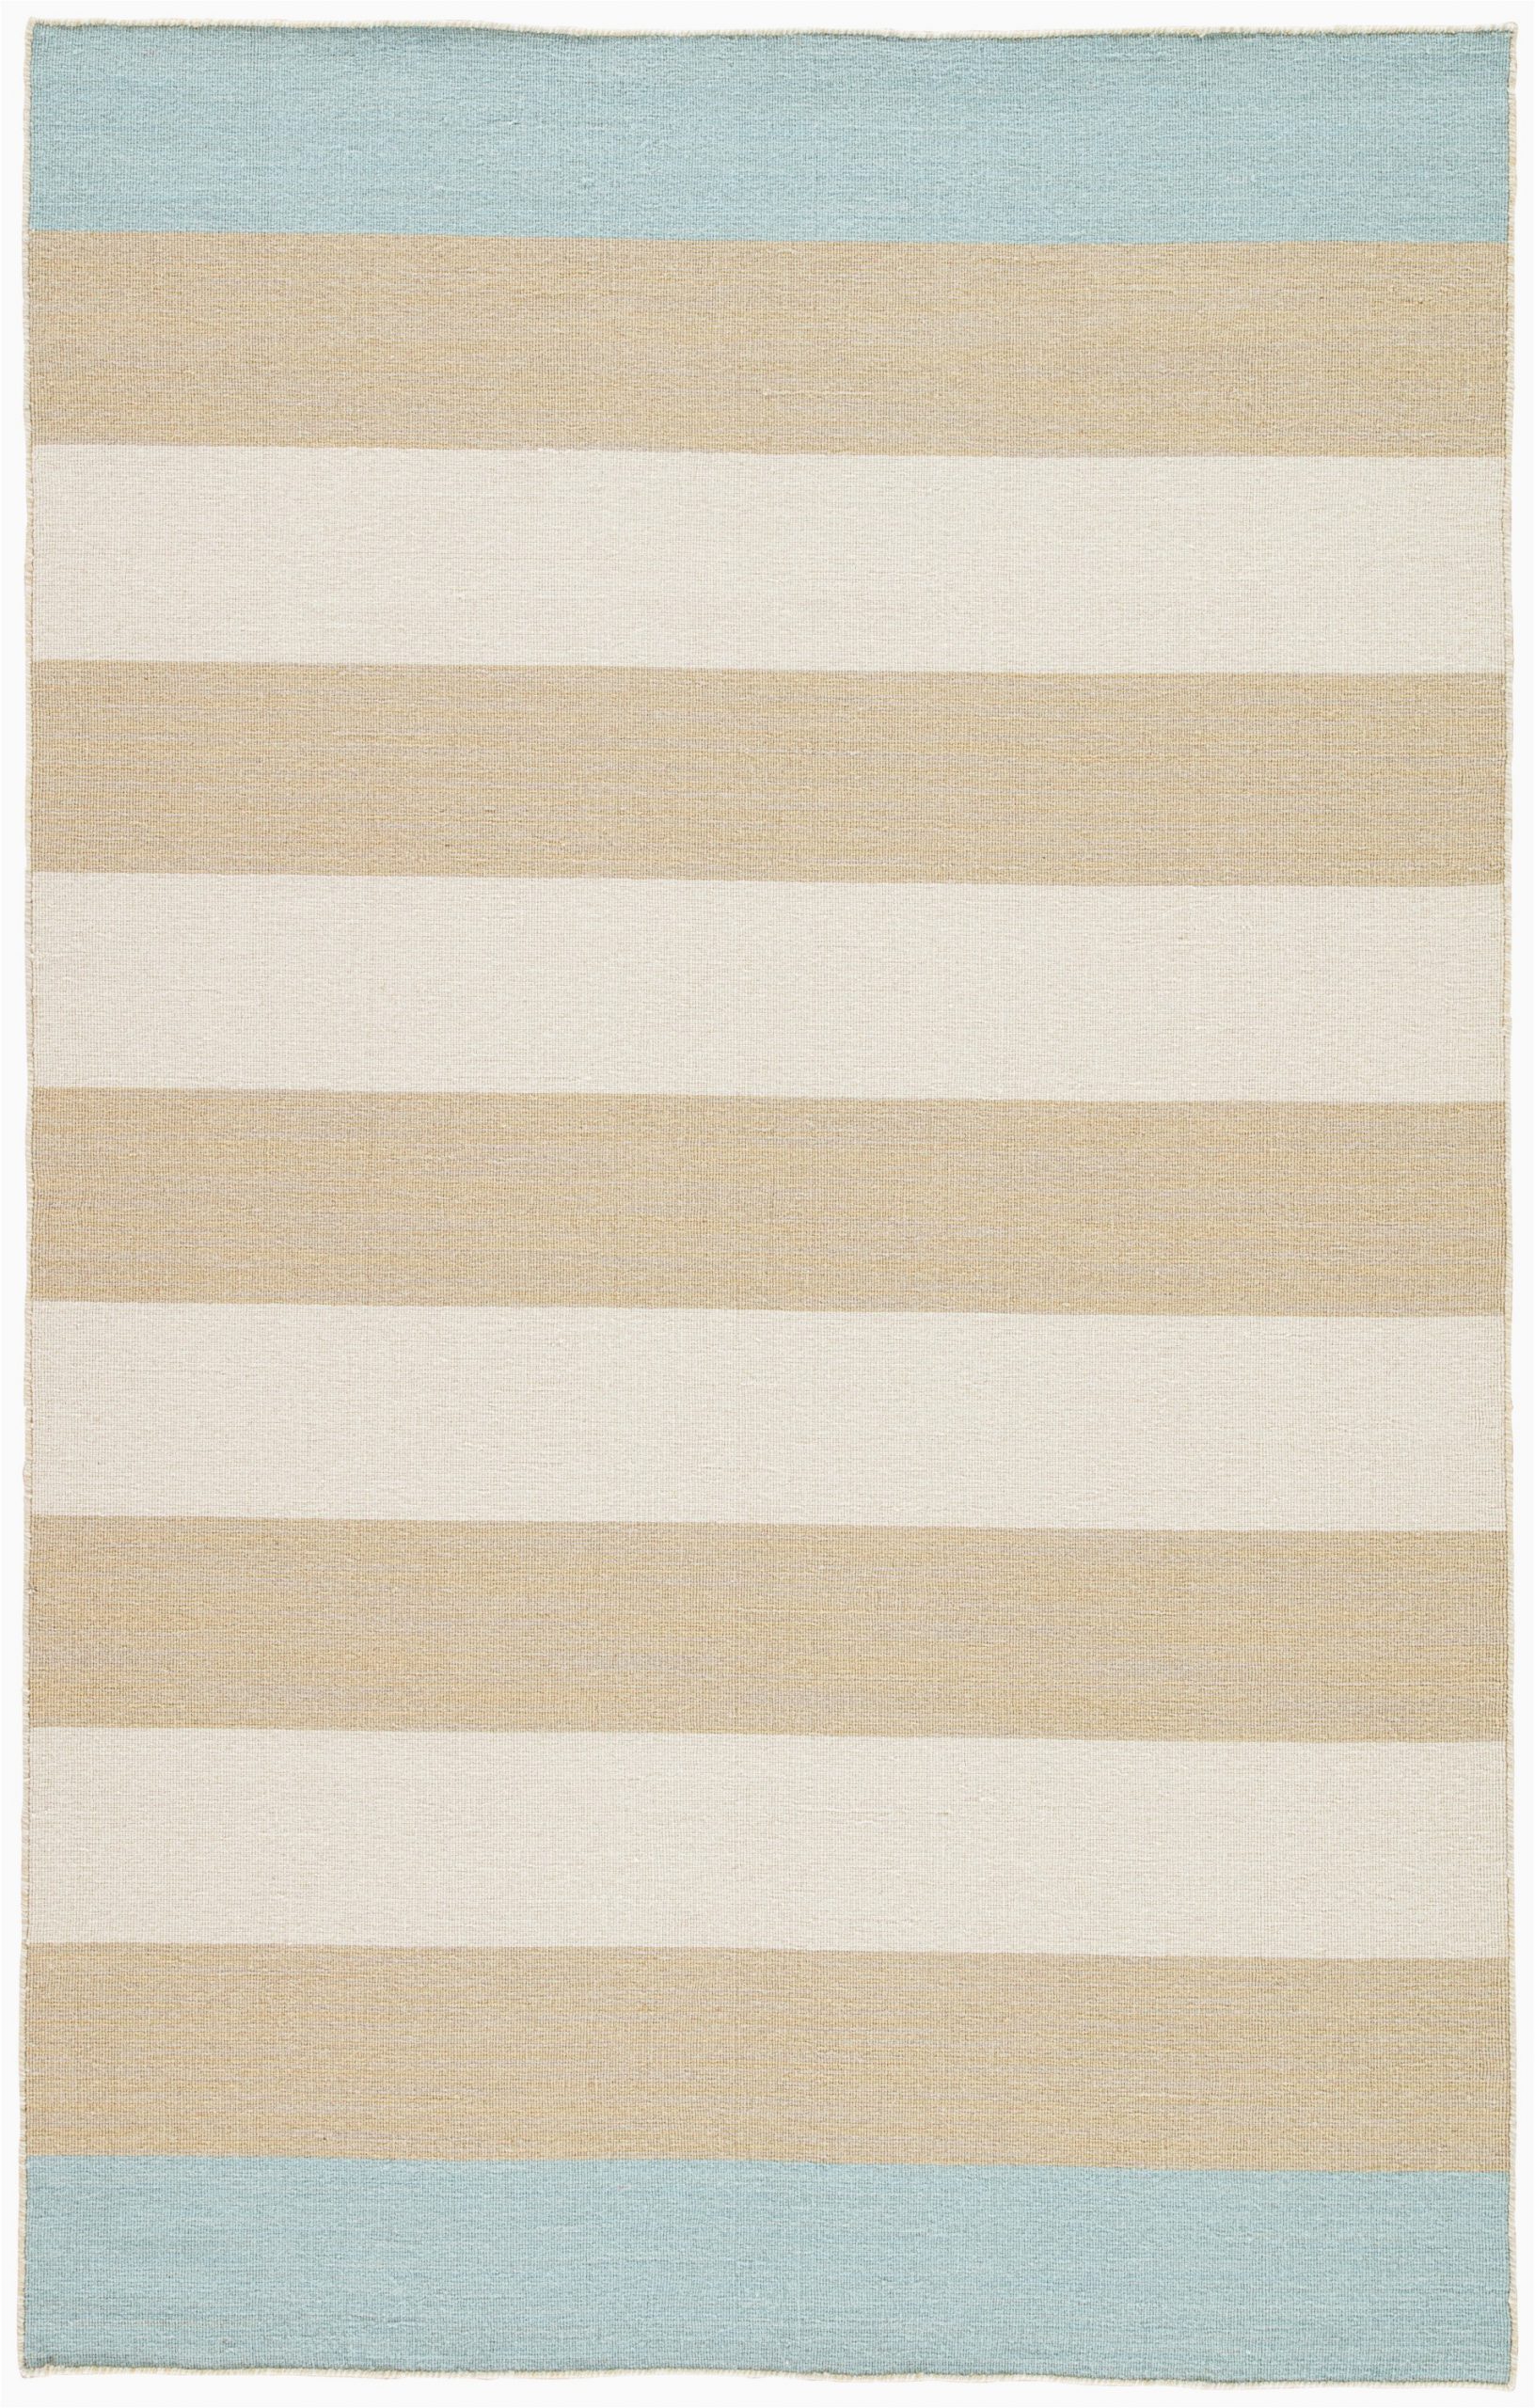 Blue and Cream Striped Rug Mendocino Striped Handmade Flatweave Wool Tan Cream Blue area Rug